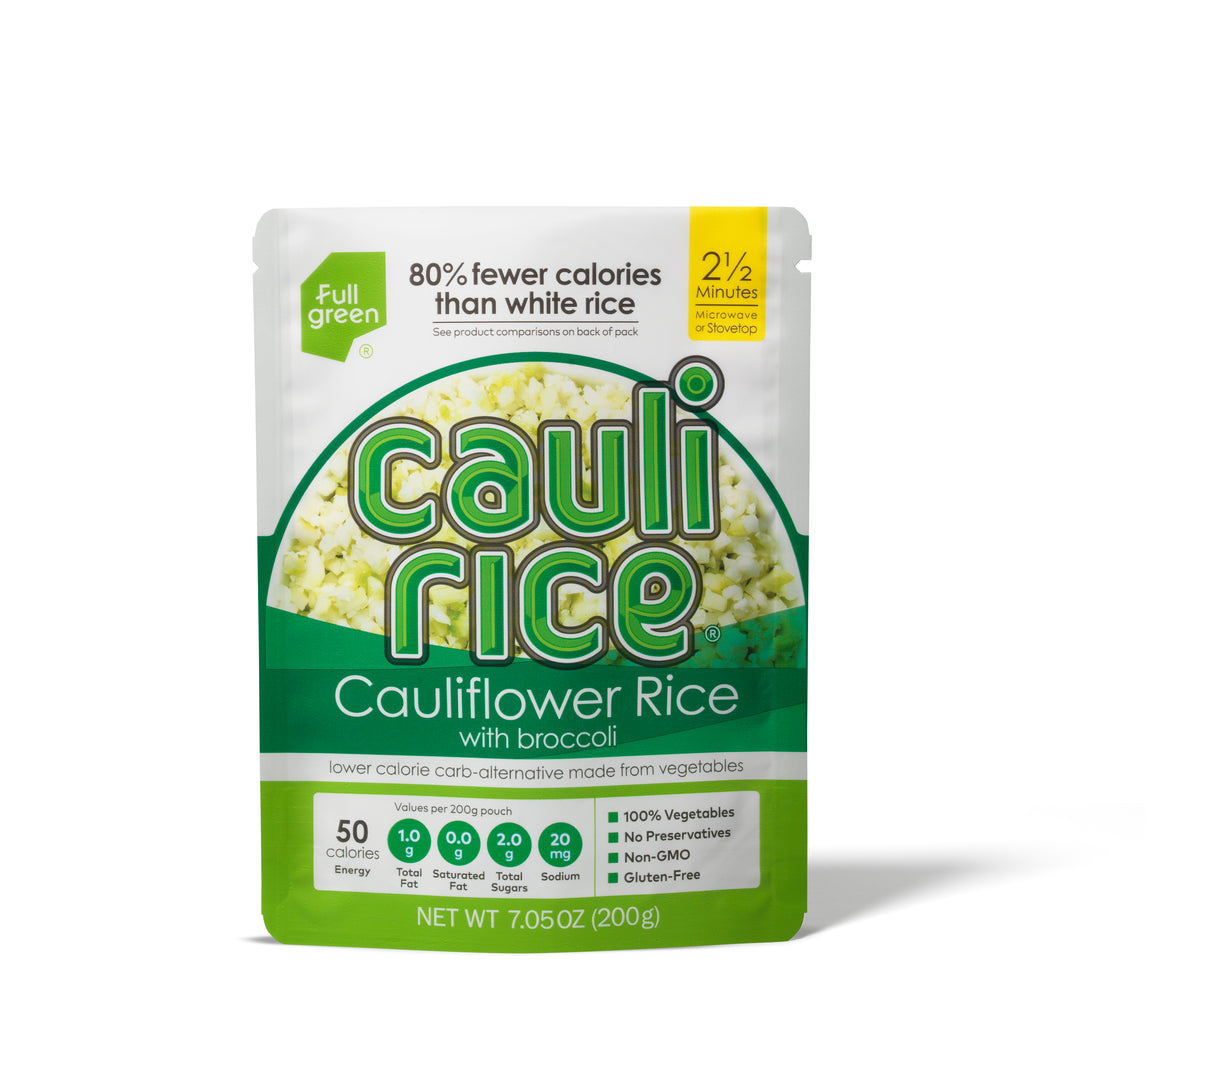 Cauli Rice - Cauliflower Rice With Broccoli